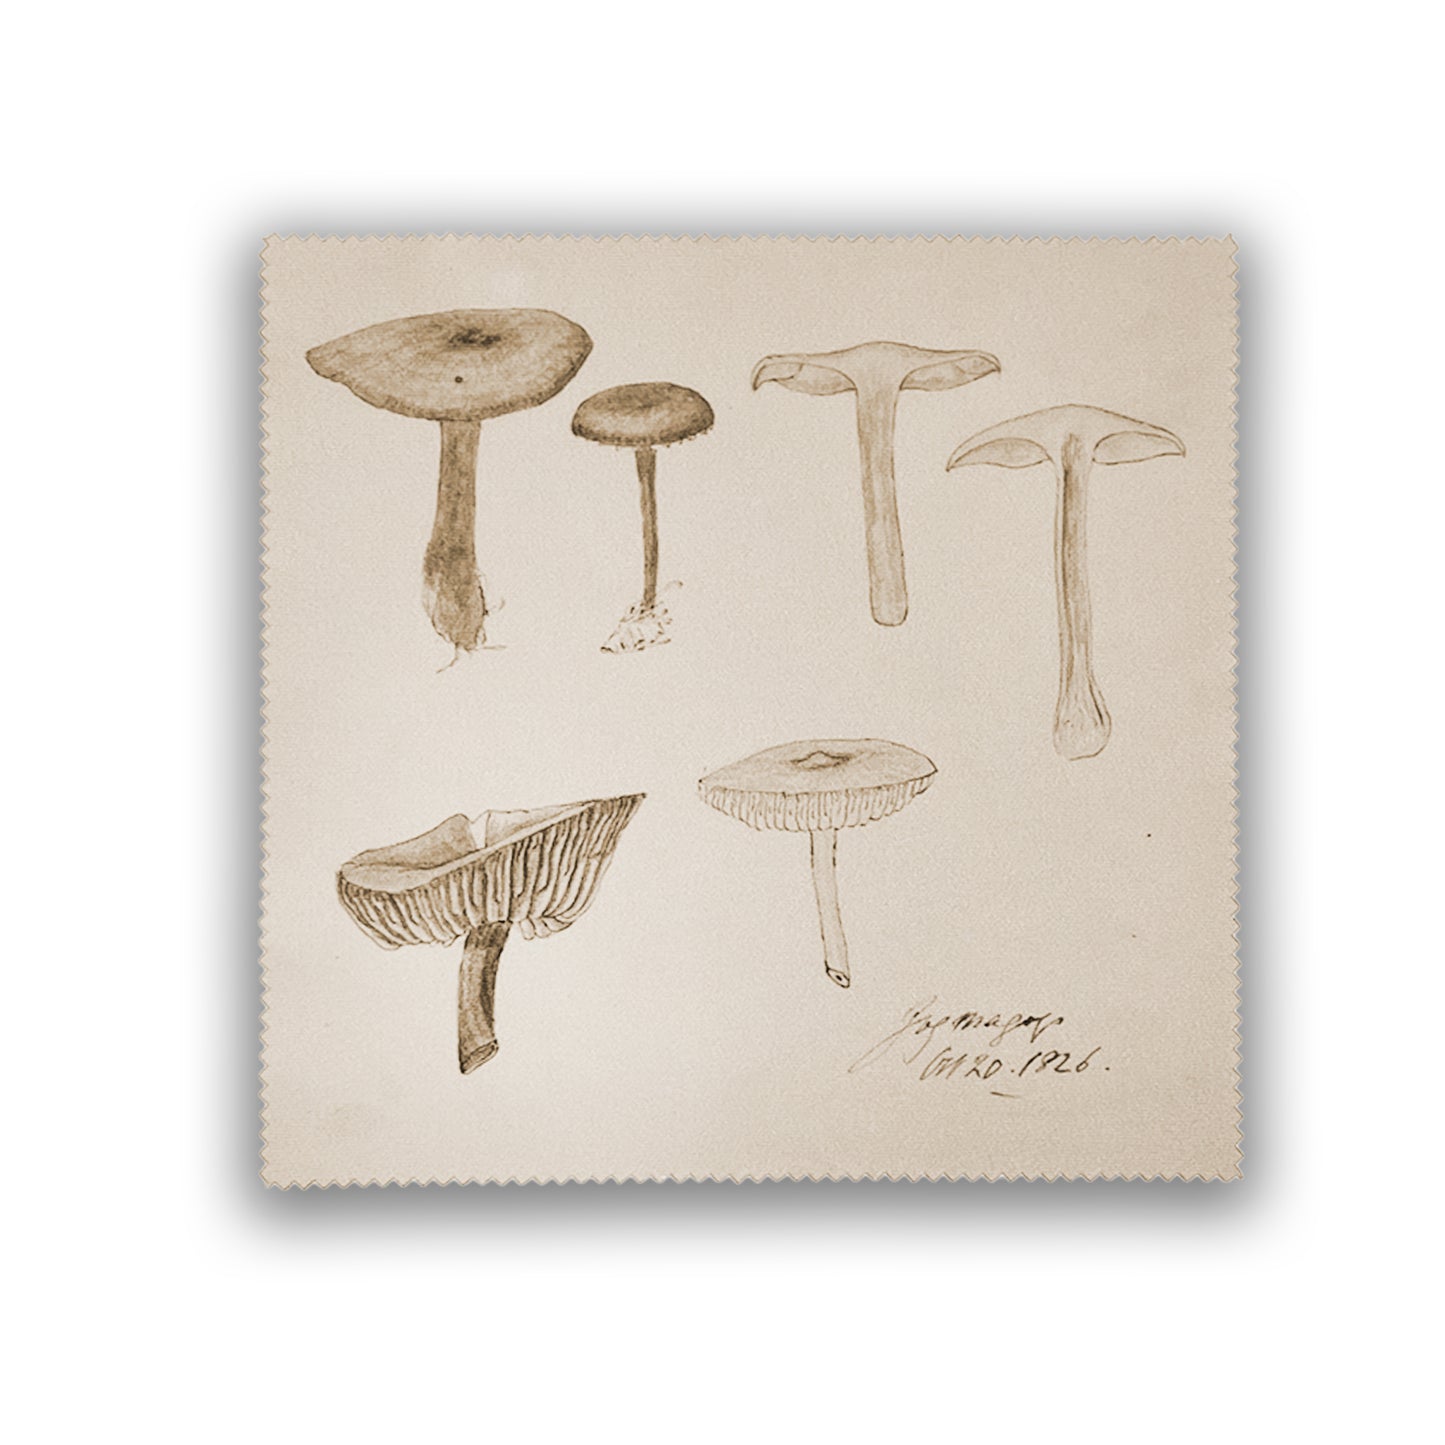 Lens cloth featuring Fungi illustrations